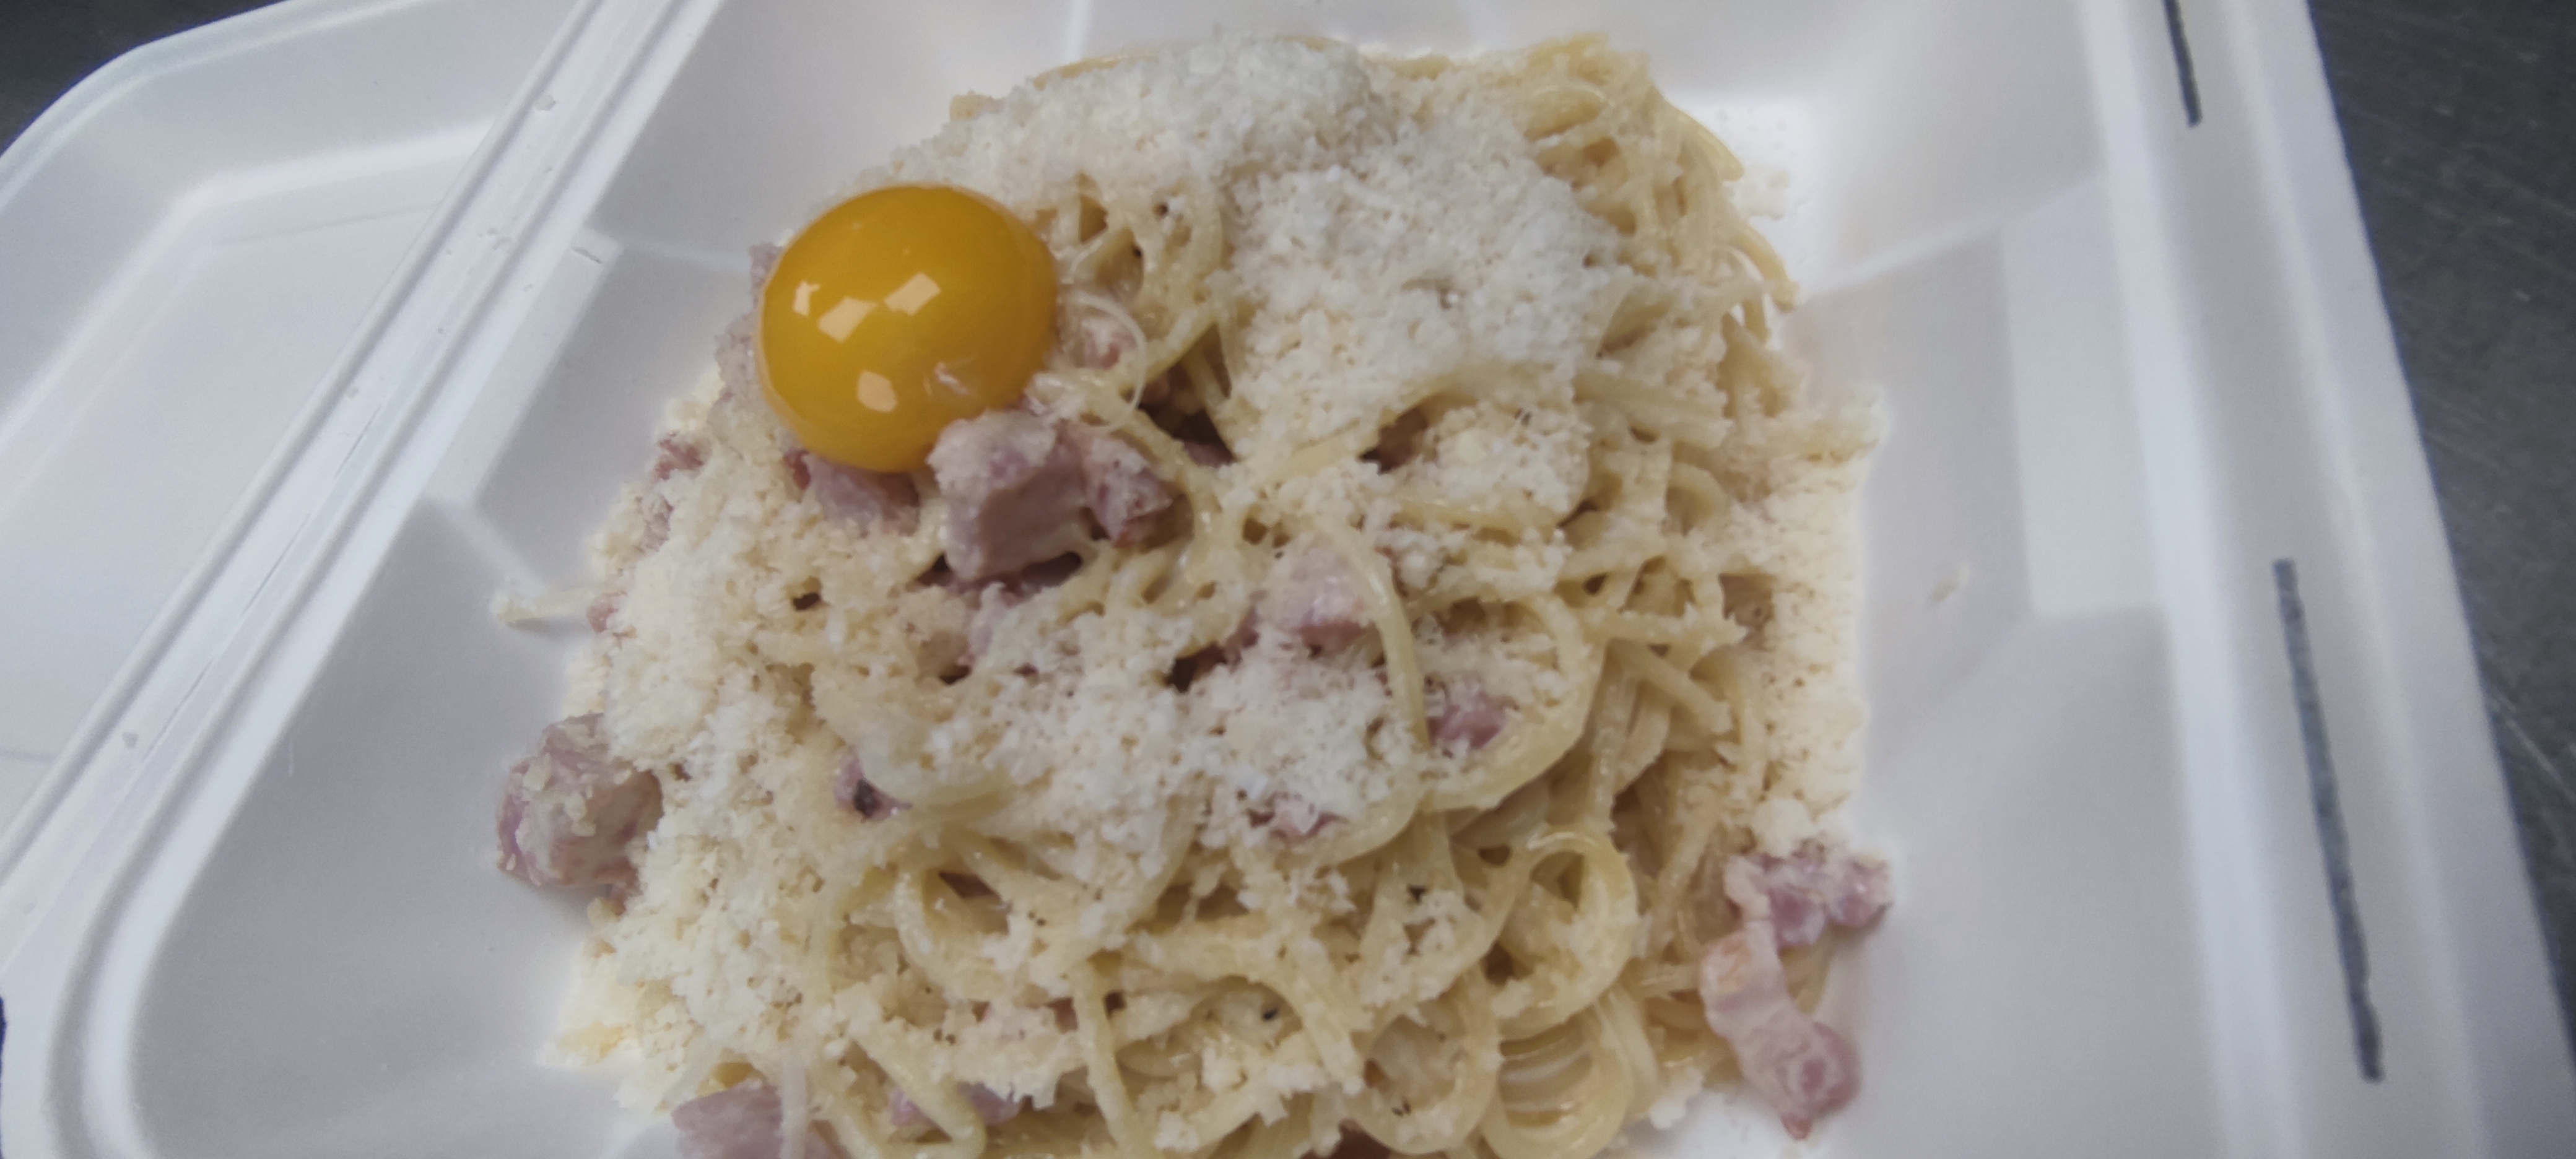 Carbonara-style pasta